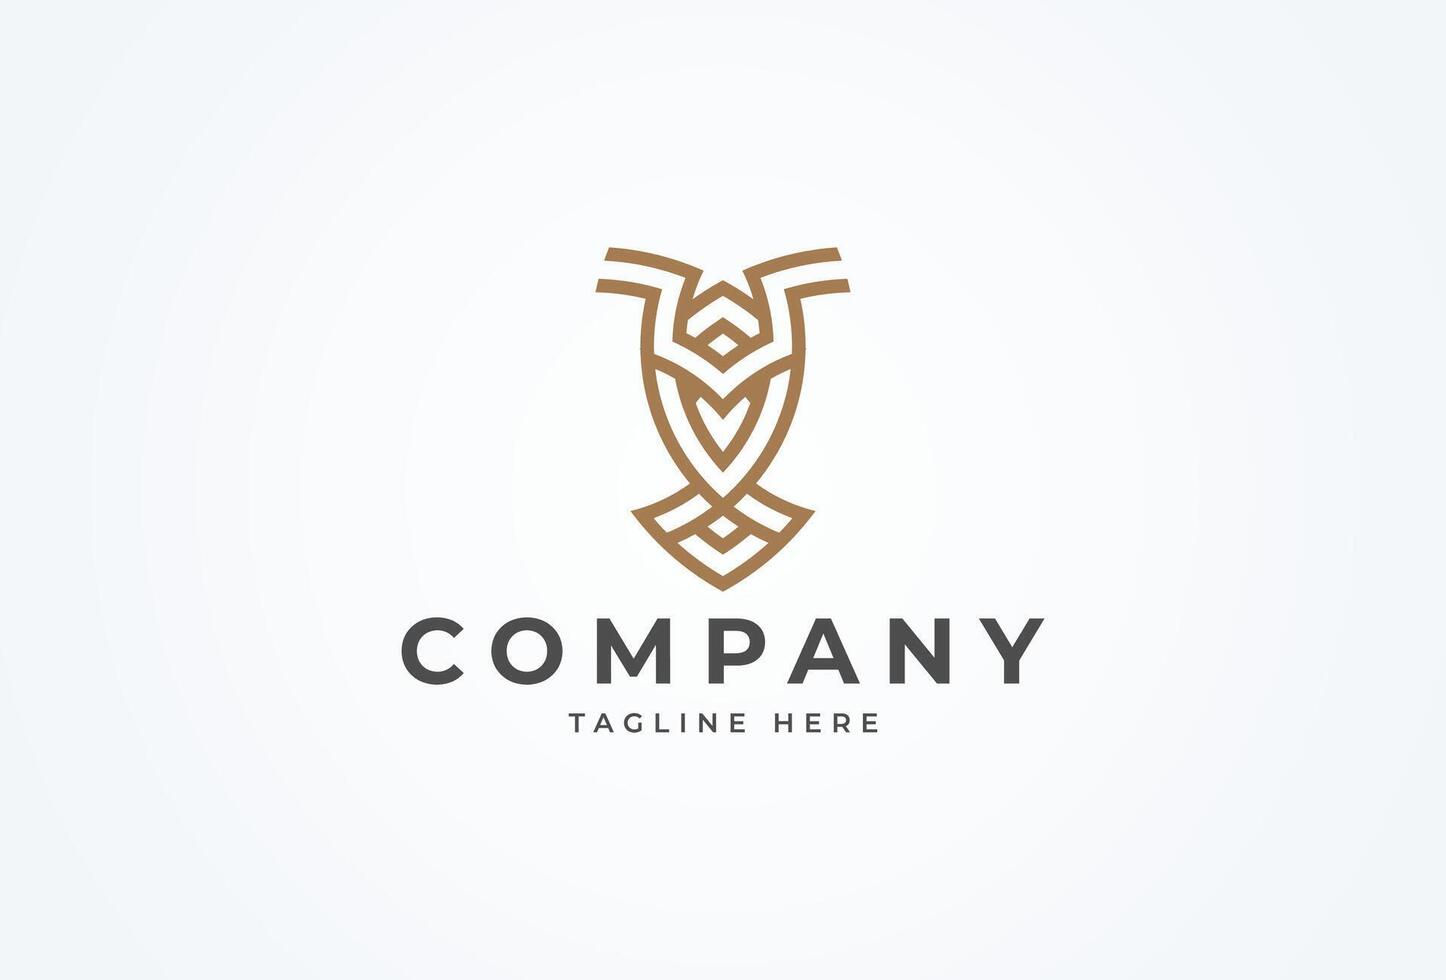 Owl logo Design, modern and minimalist owl logo design inspiration, flat design logo template element , illustration vector